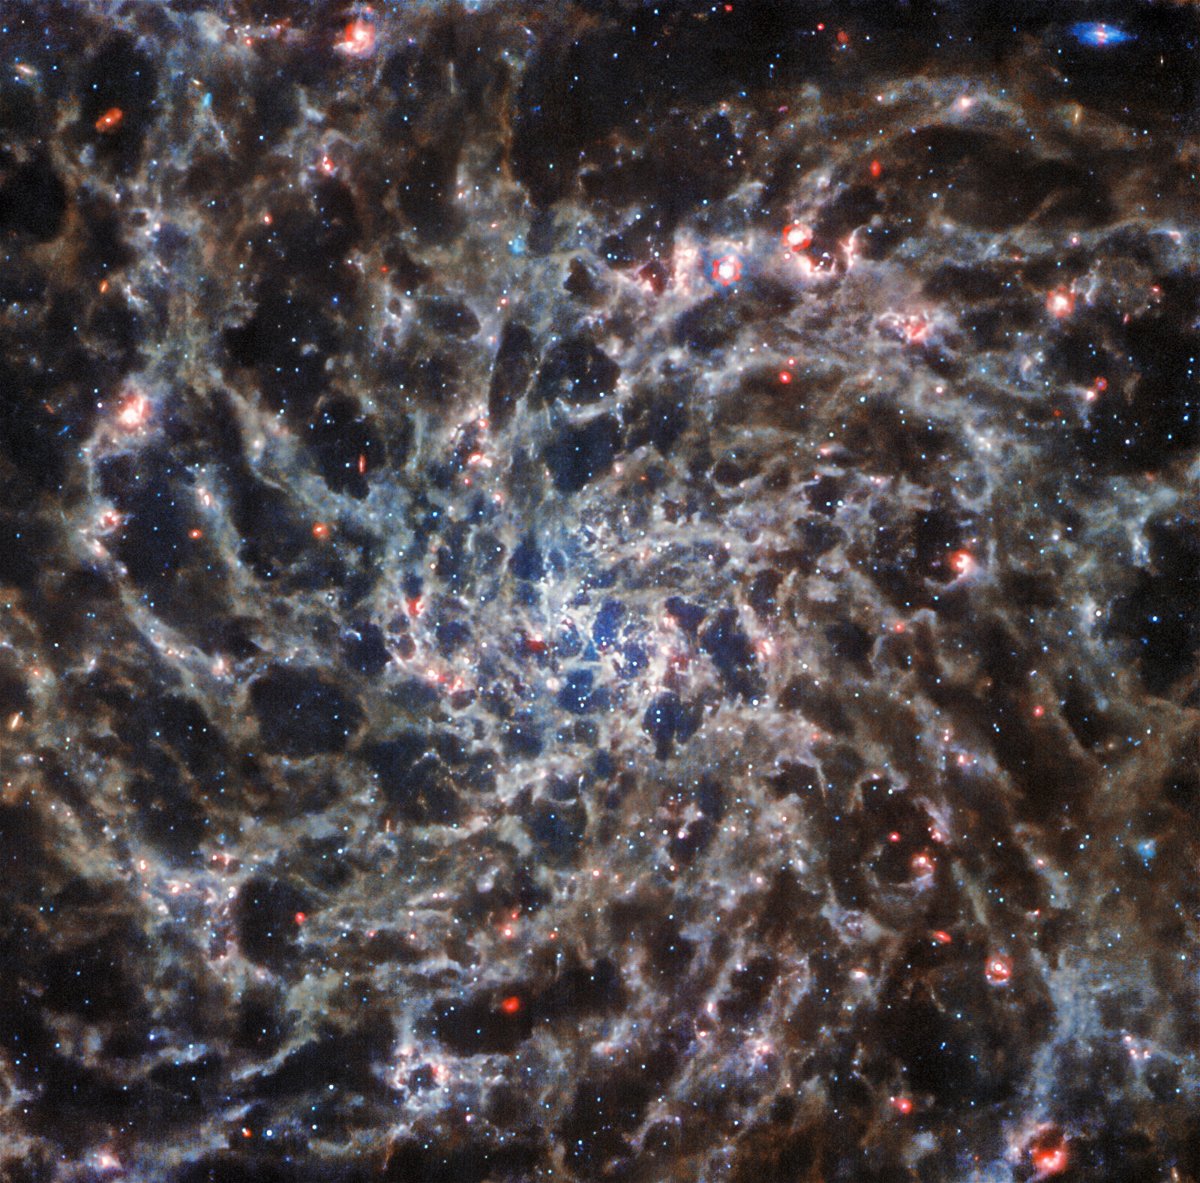 <i>ESA/NASA/CSA/J. Lee</i><br/>The Webb telescope observed the spiral galaxy IC 5332